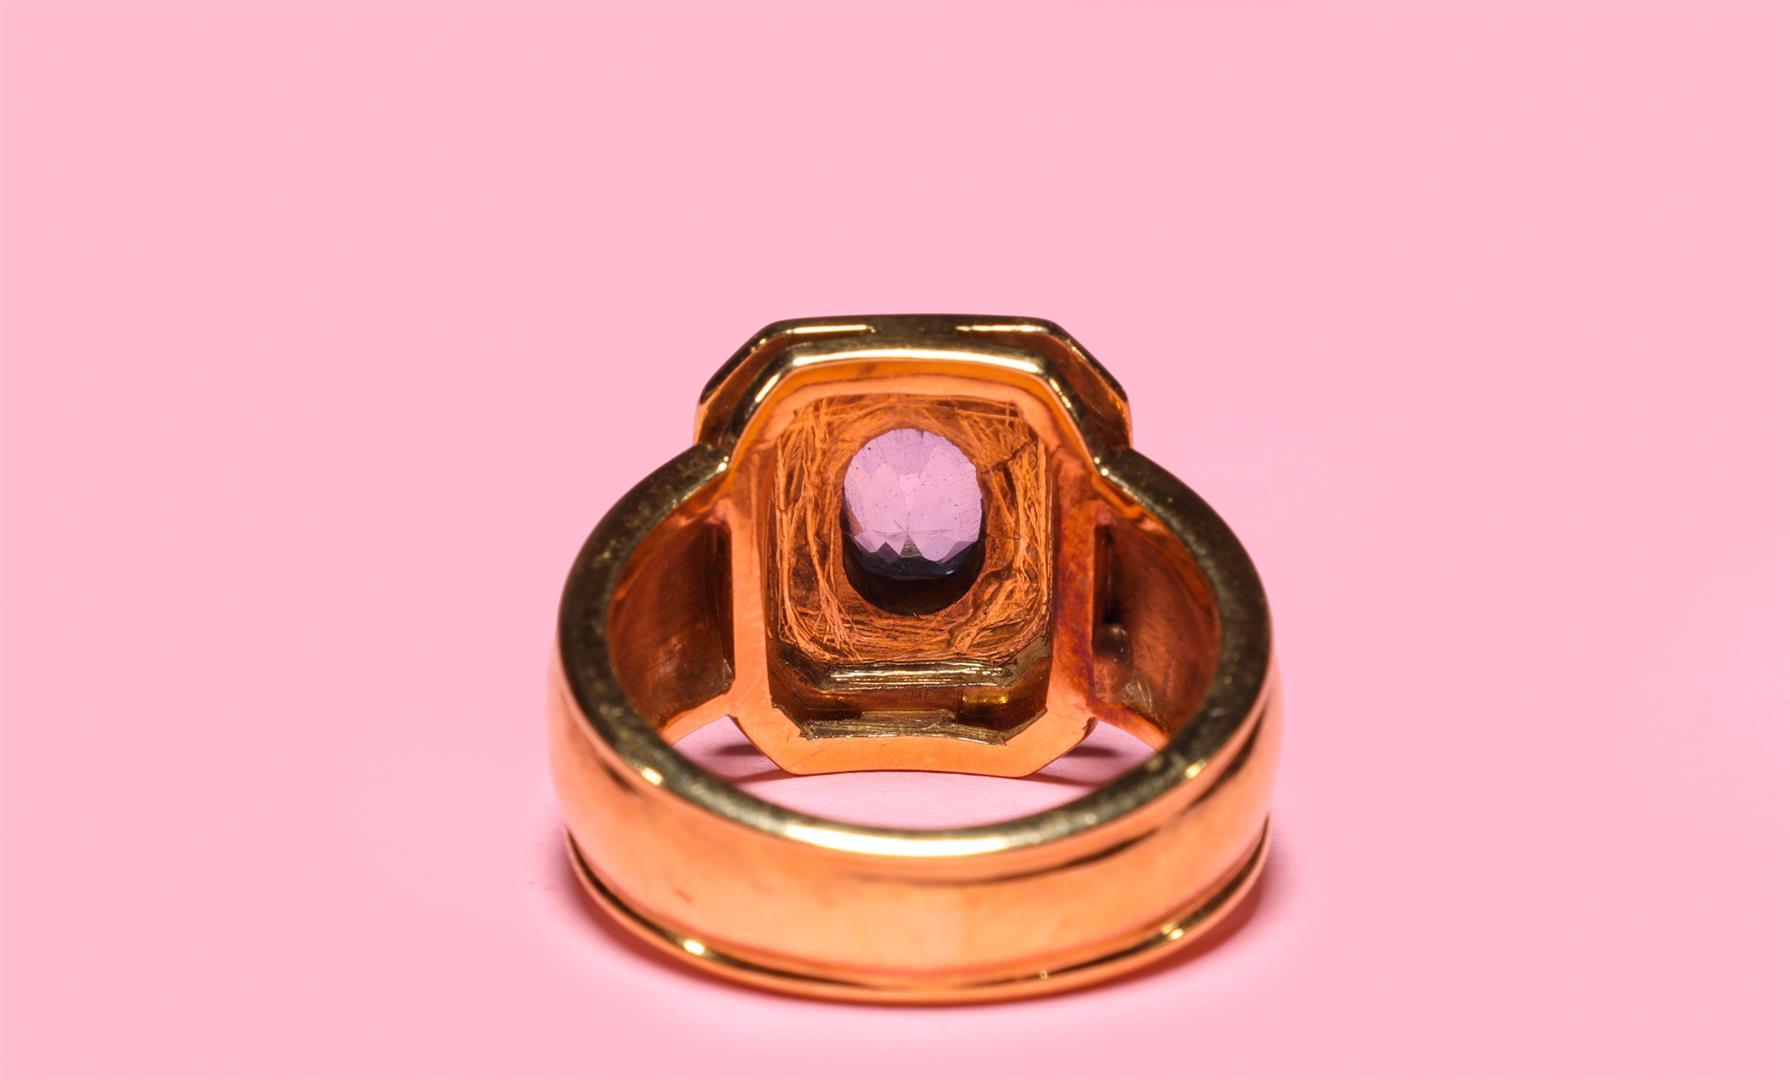 Heavy 18k Yellow Gold Sapphire Ring